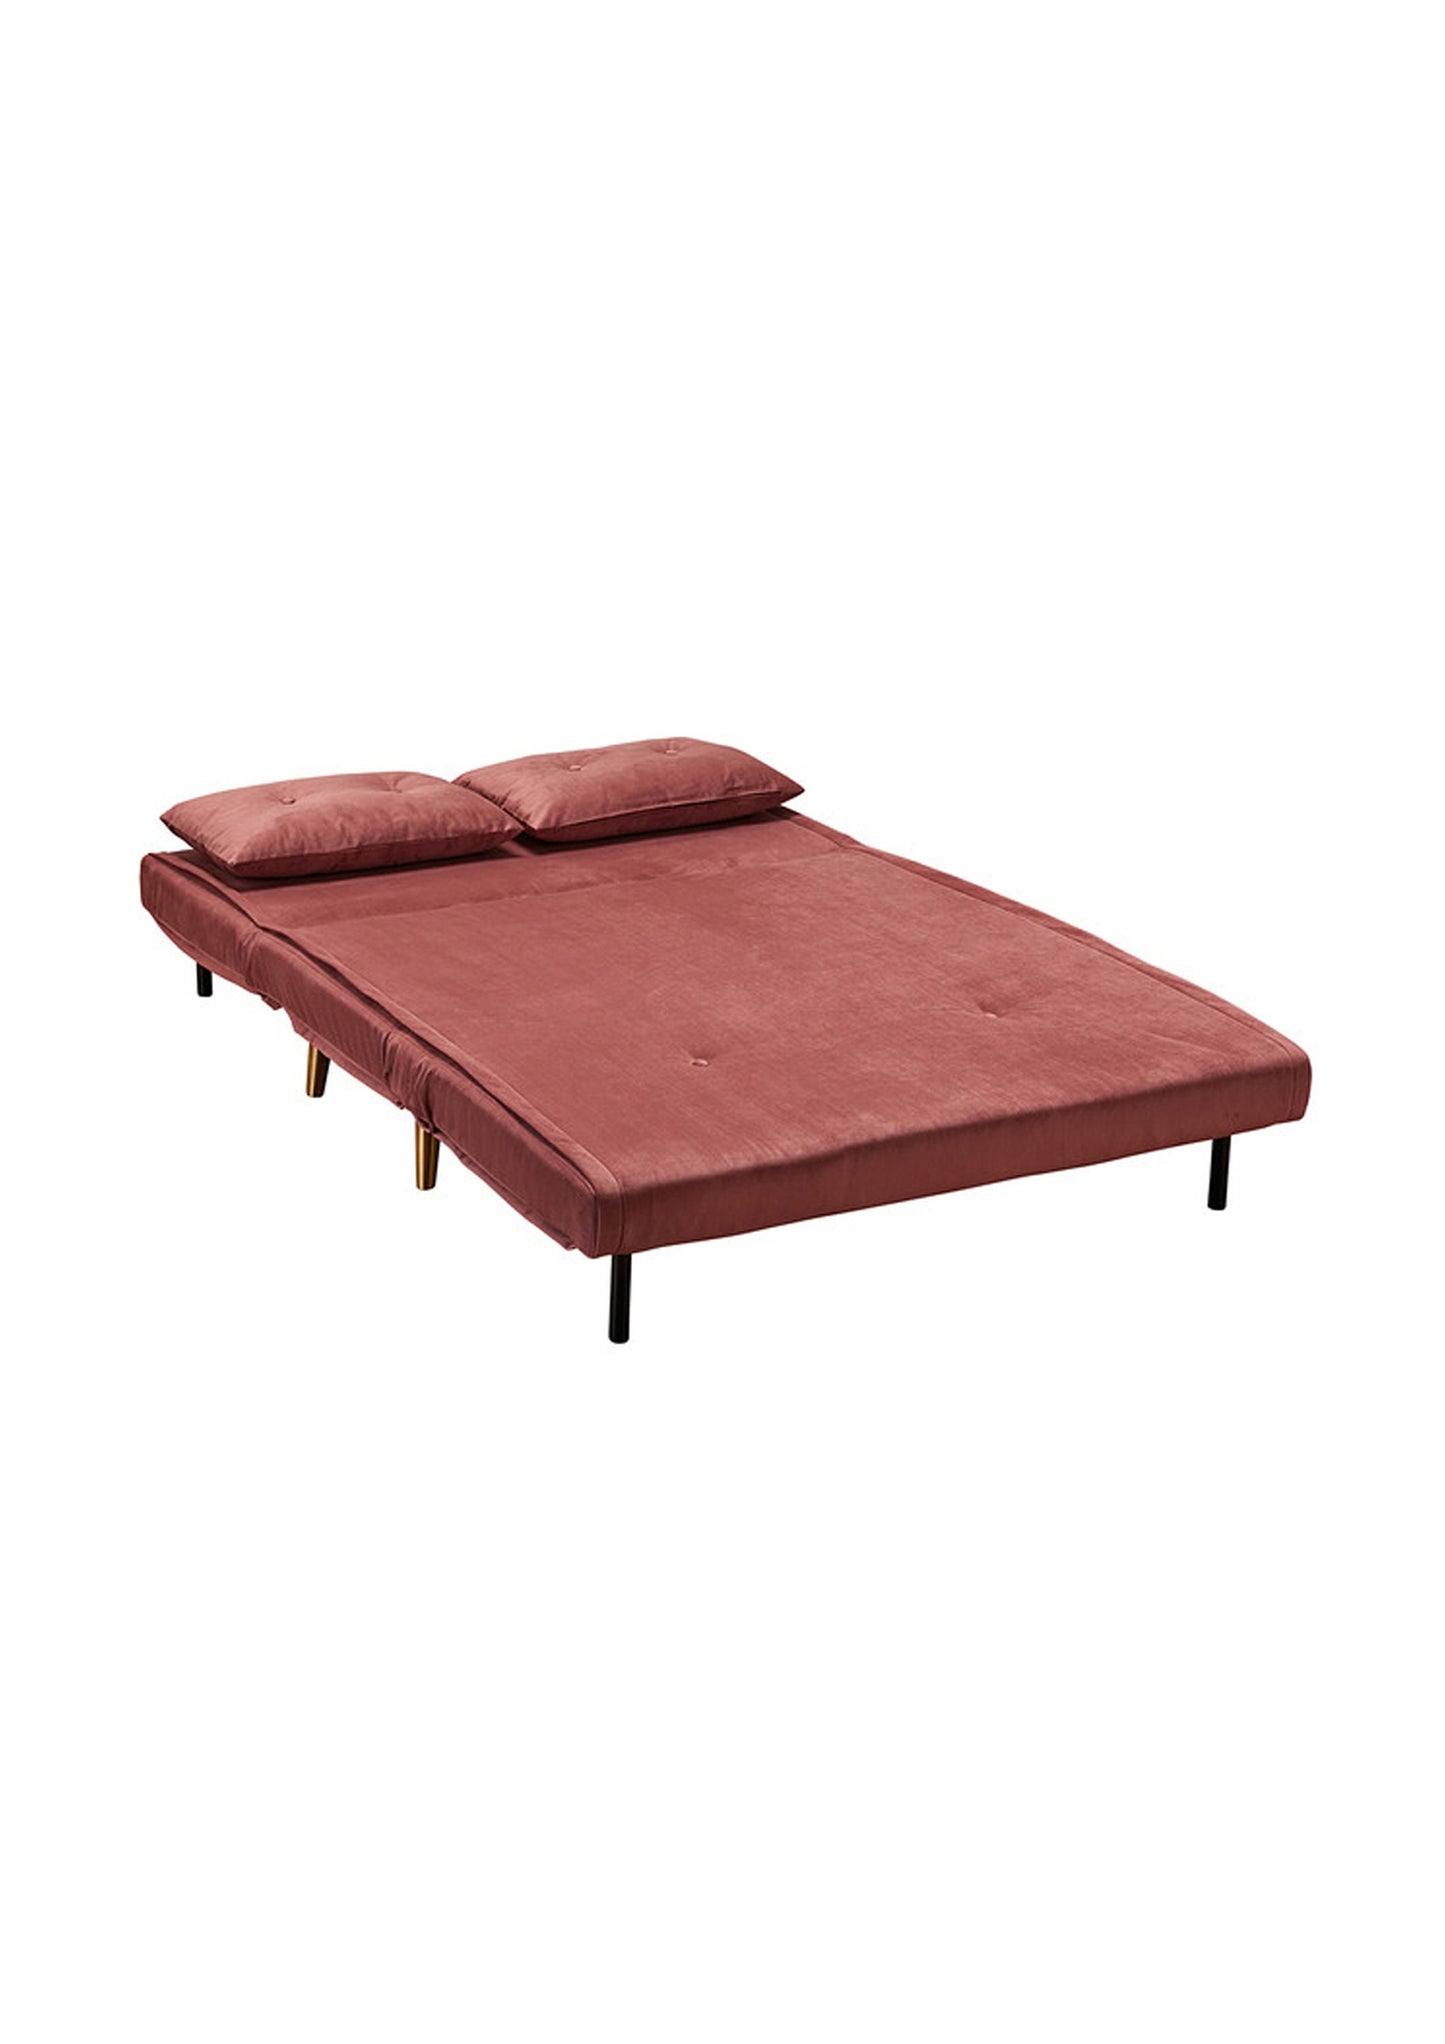 Pink Plush Velvet Sofa Bed With Gold Legs